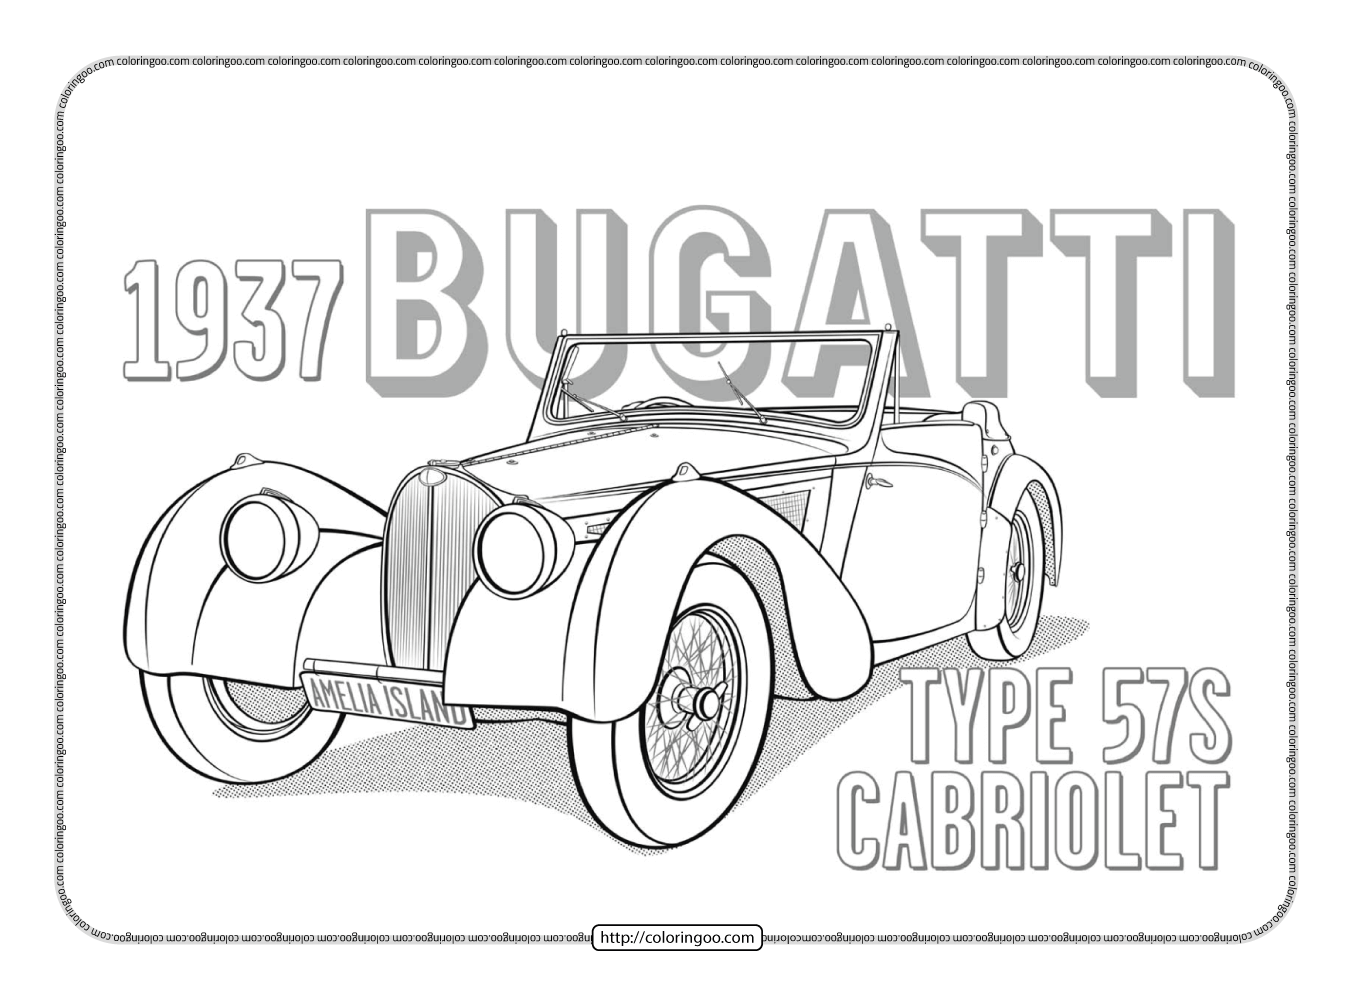 1937 bugatti type 57s cabriolet coloring page